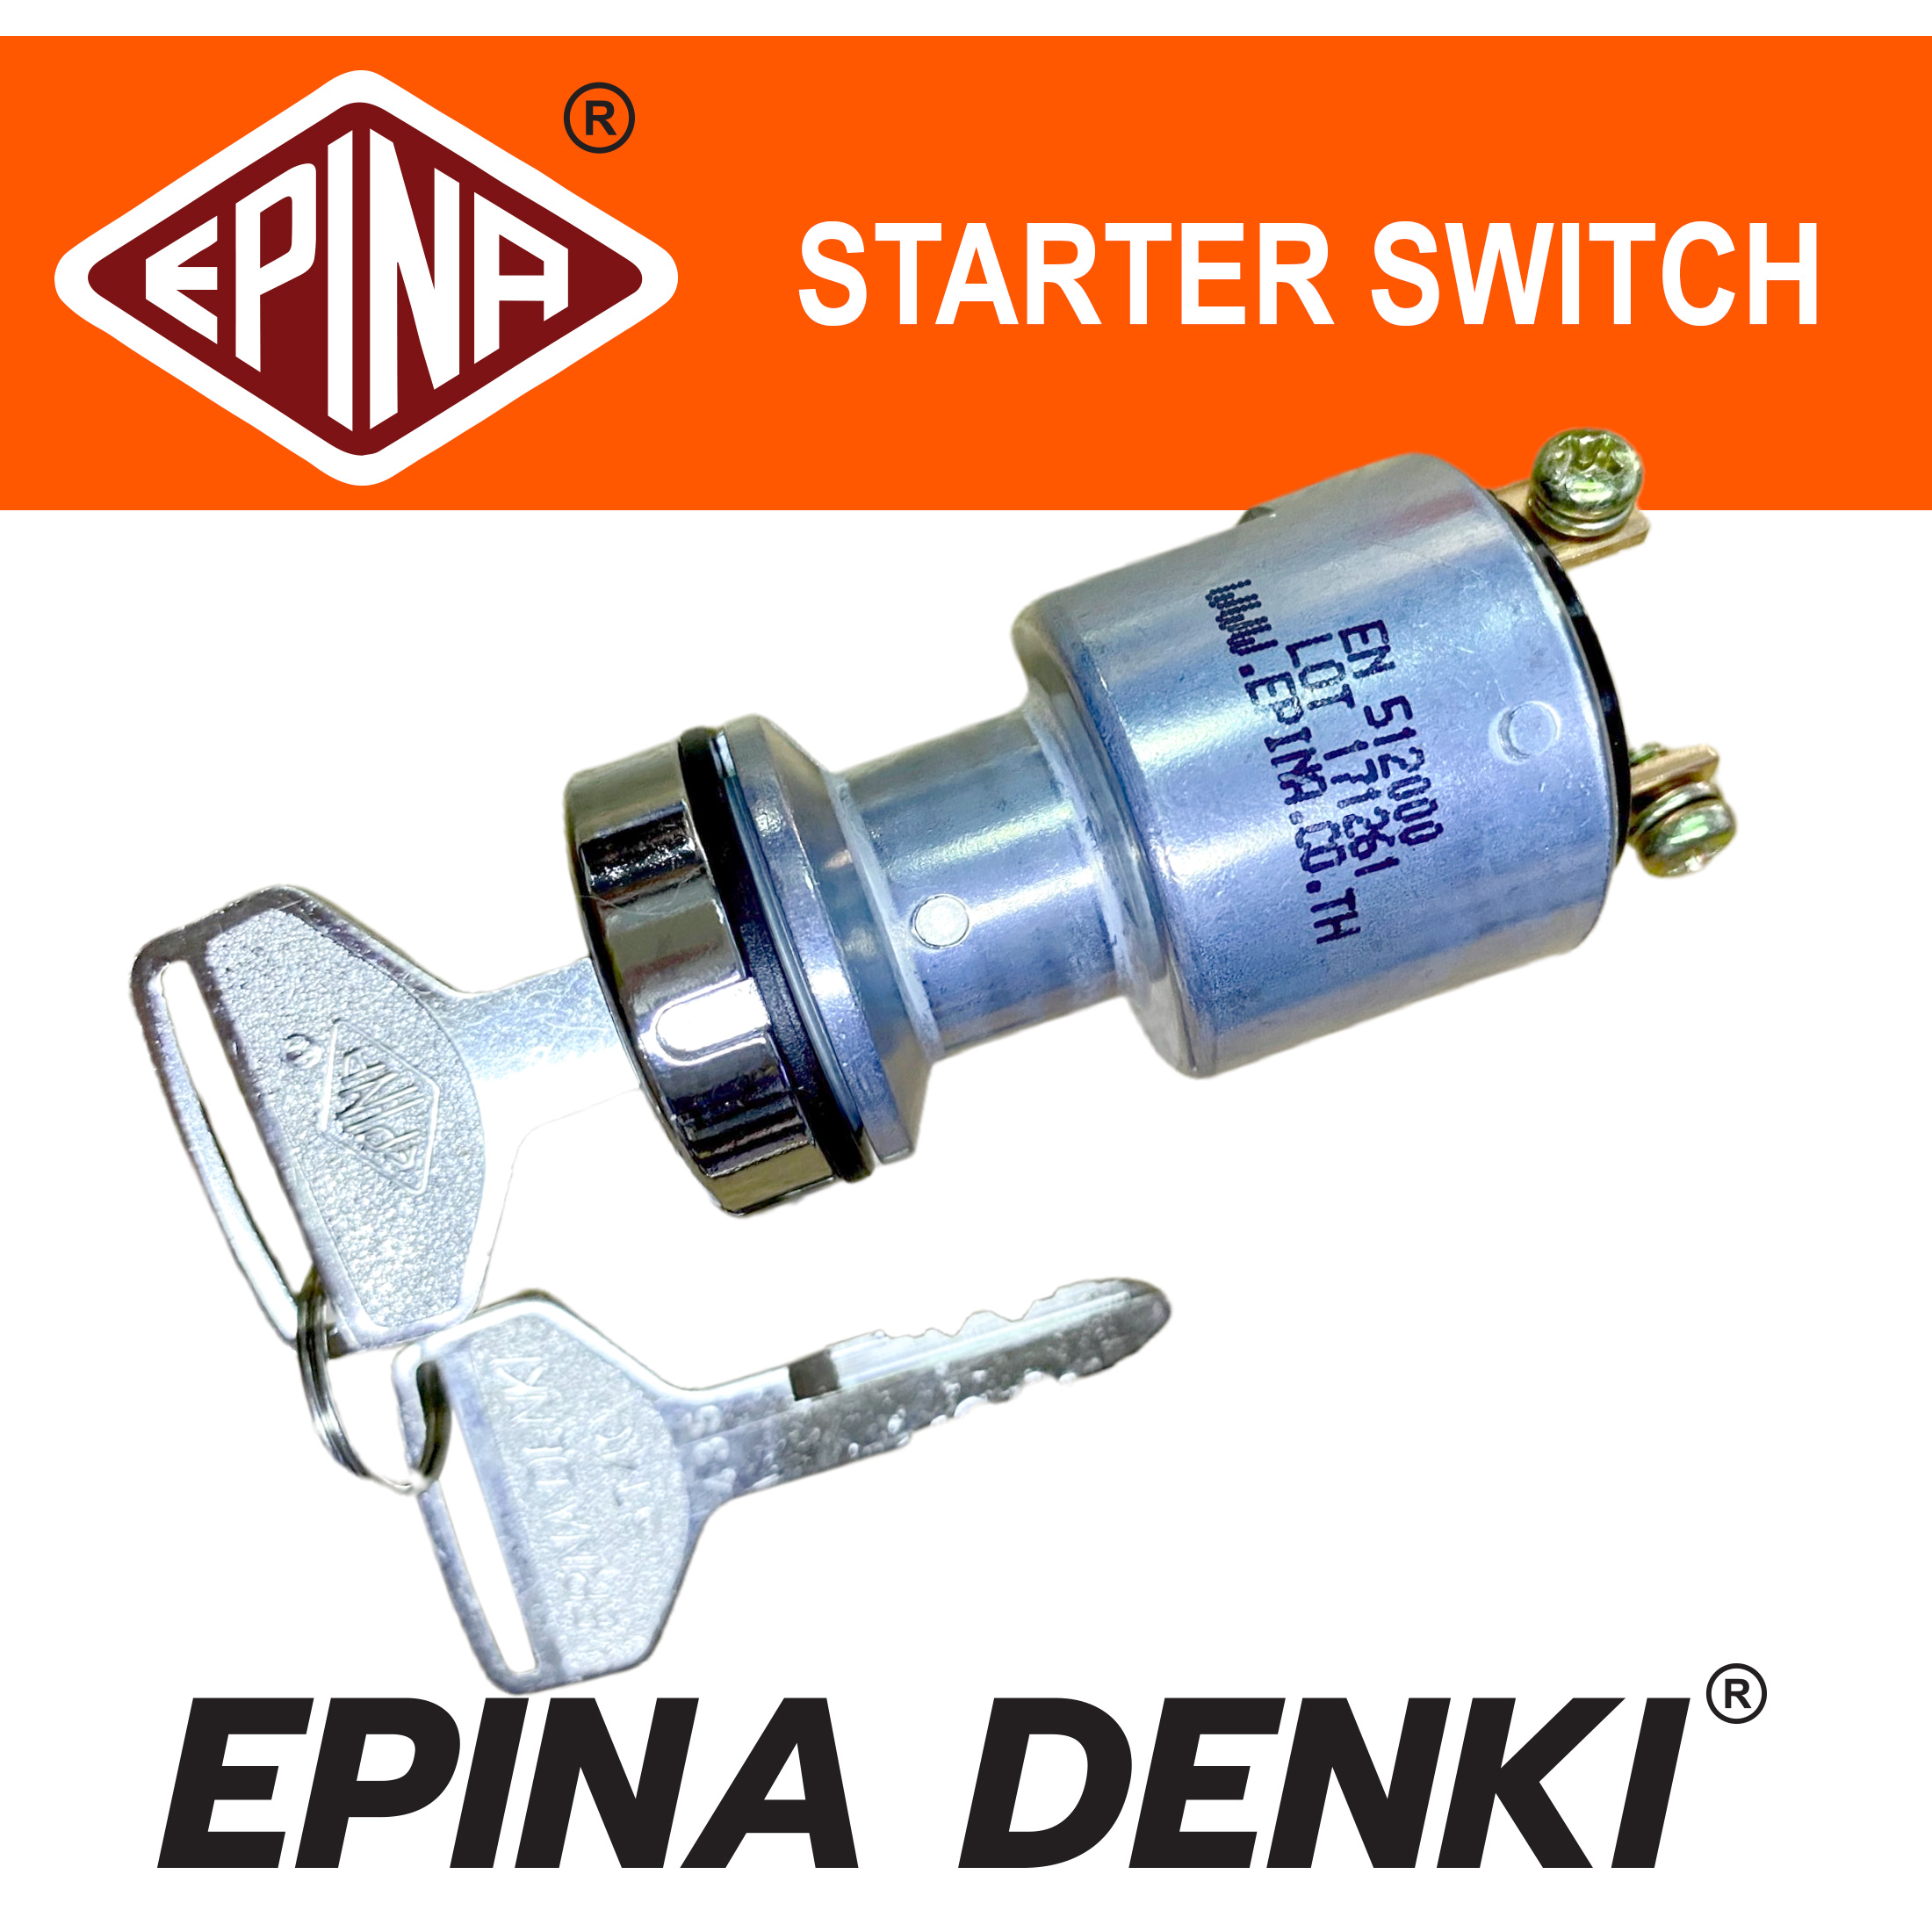 Starter Switch EPINA EN512000 ST 40 สวิทซ์กุญแจสตาร์ทคอยาว 4 สาย สวิตซ์กุญแจ ชุดสวิทซ์กุญแจ คอยาว EPINA DENKI แท้ คุณภาพดี ทนทาน ราคาถูก อะไหล่ราคาส่ง